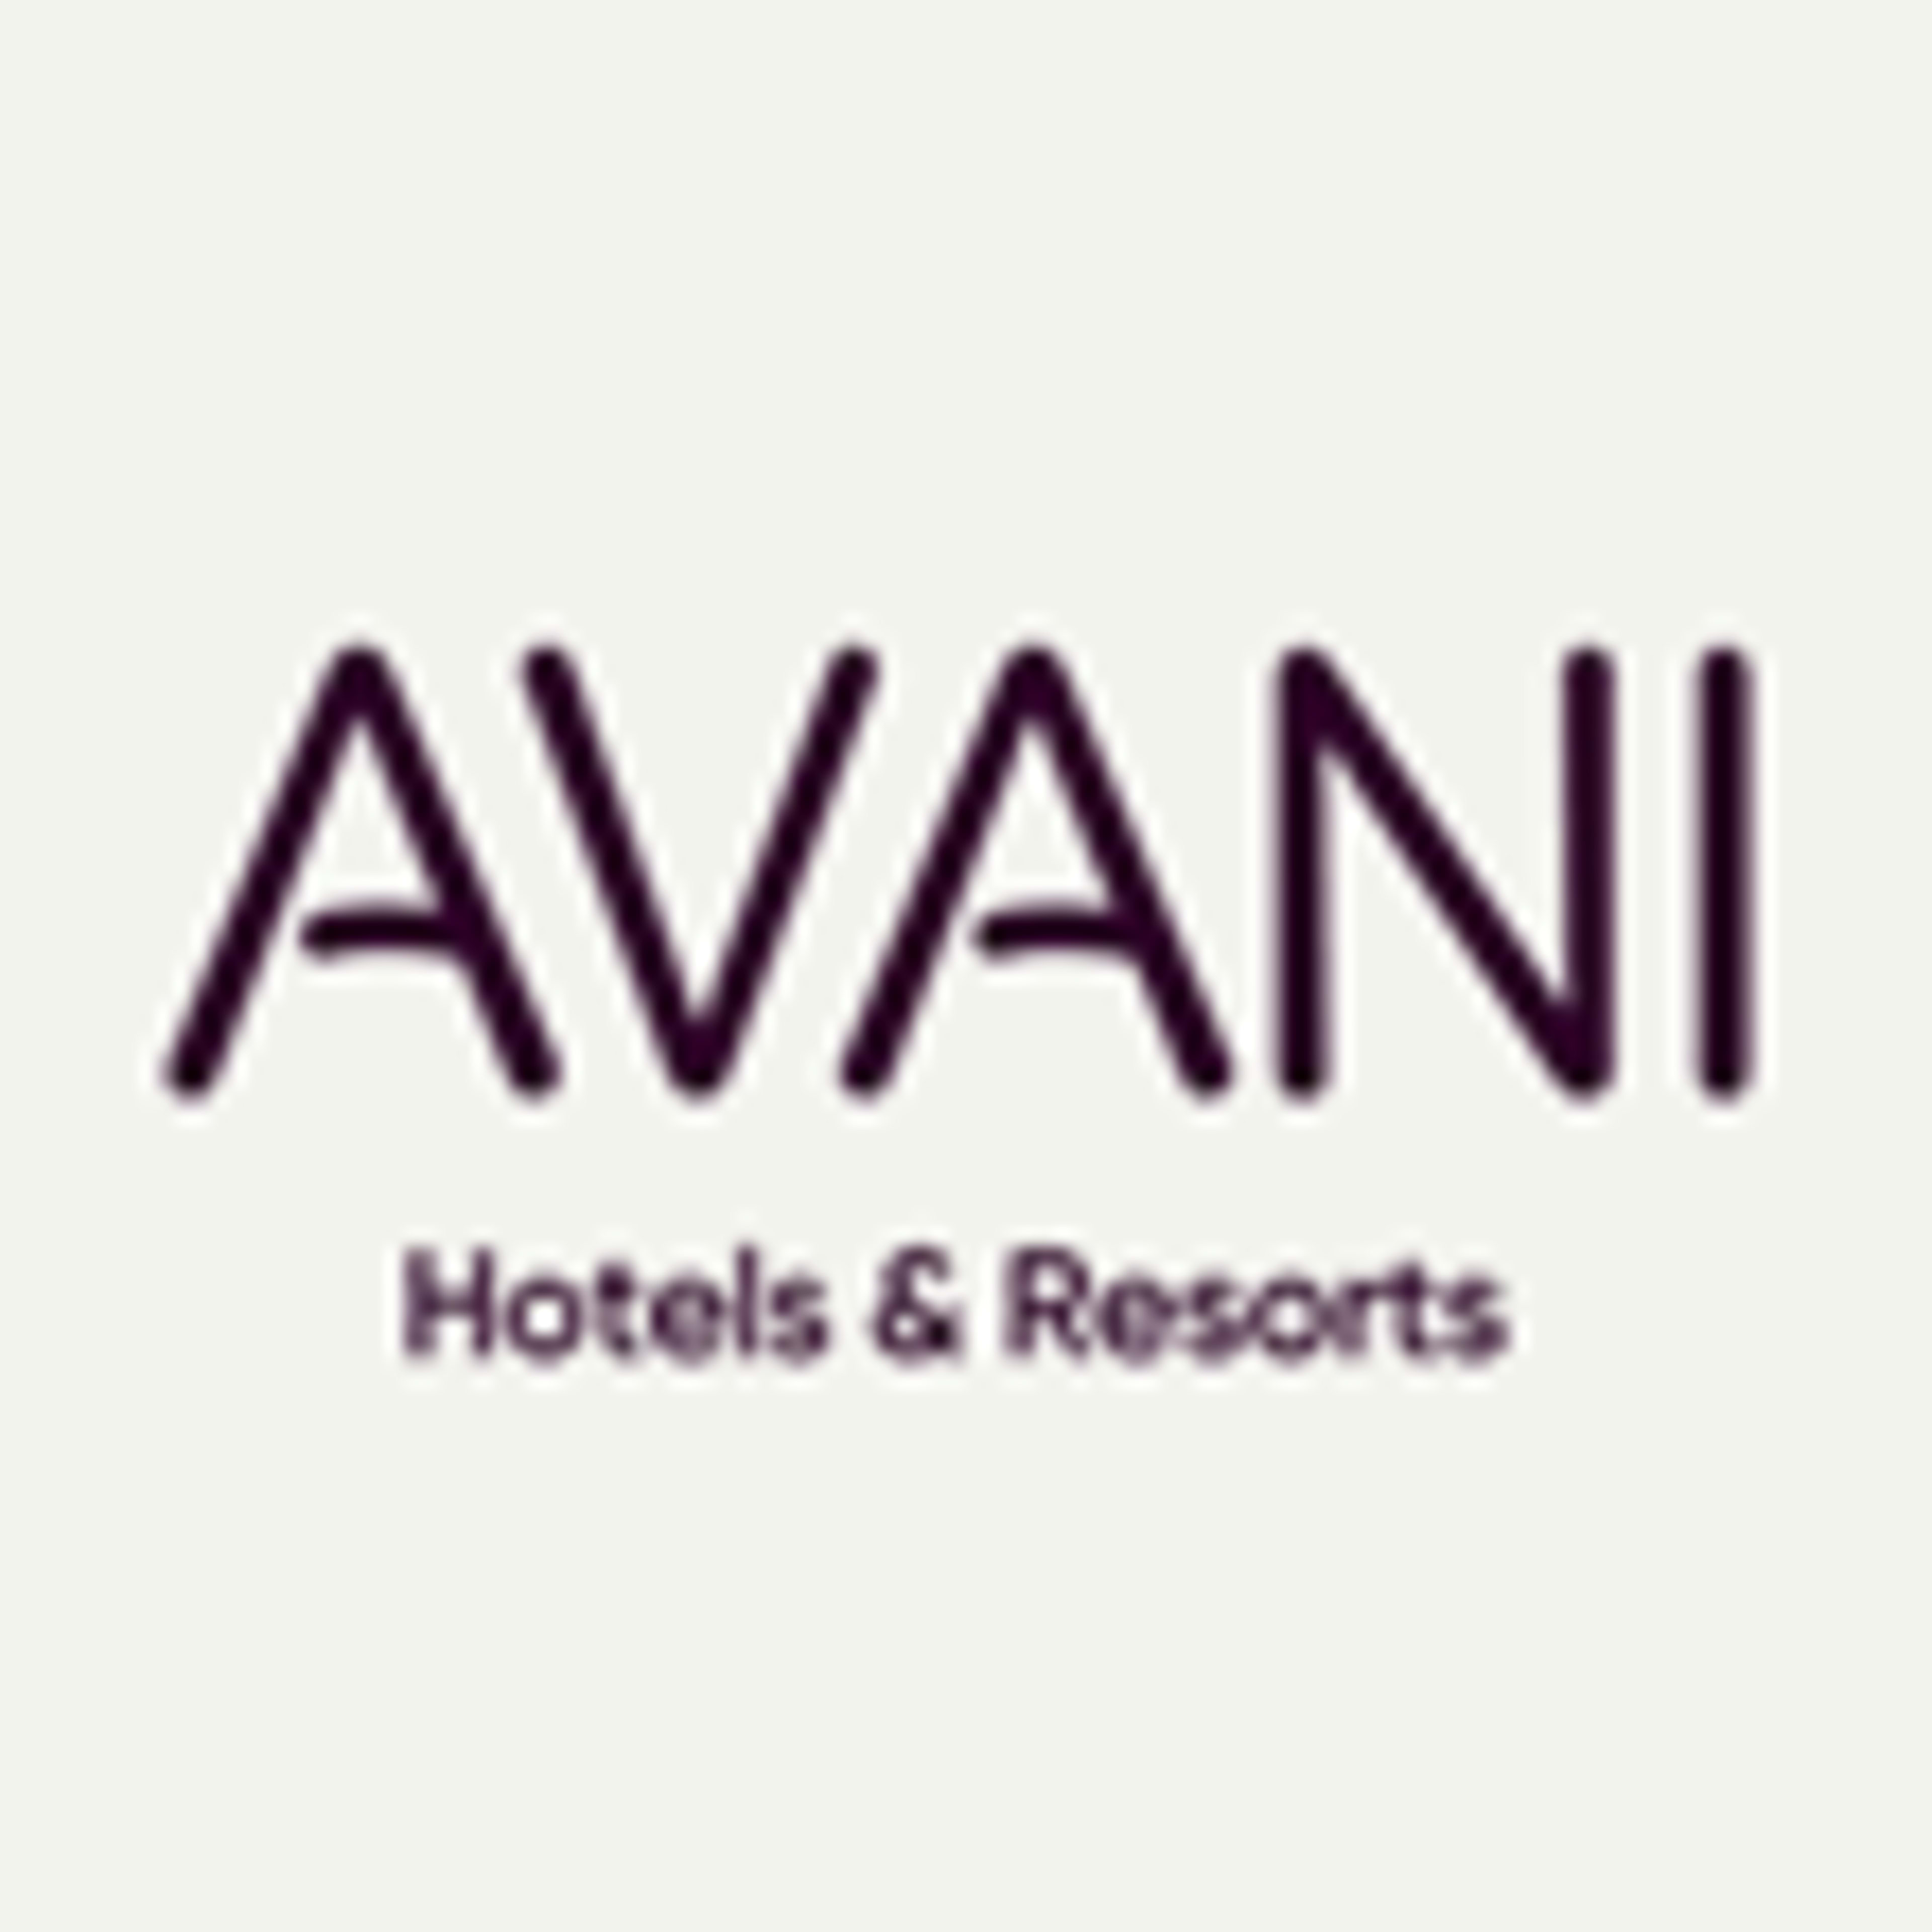 Avani Hotels & ResortsCode